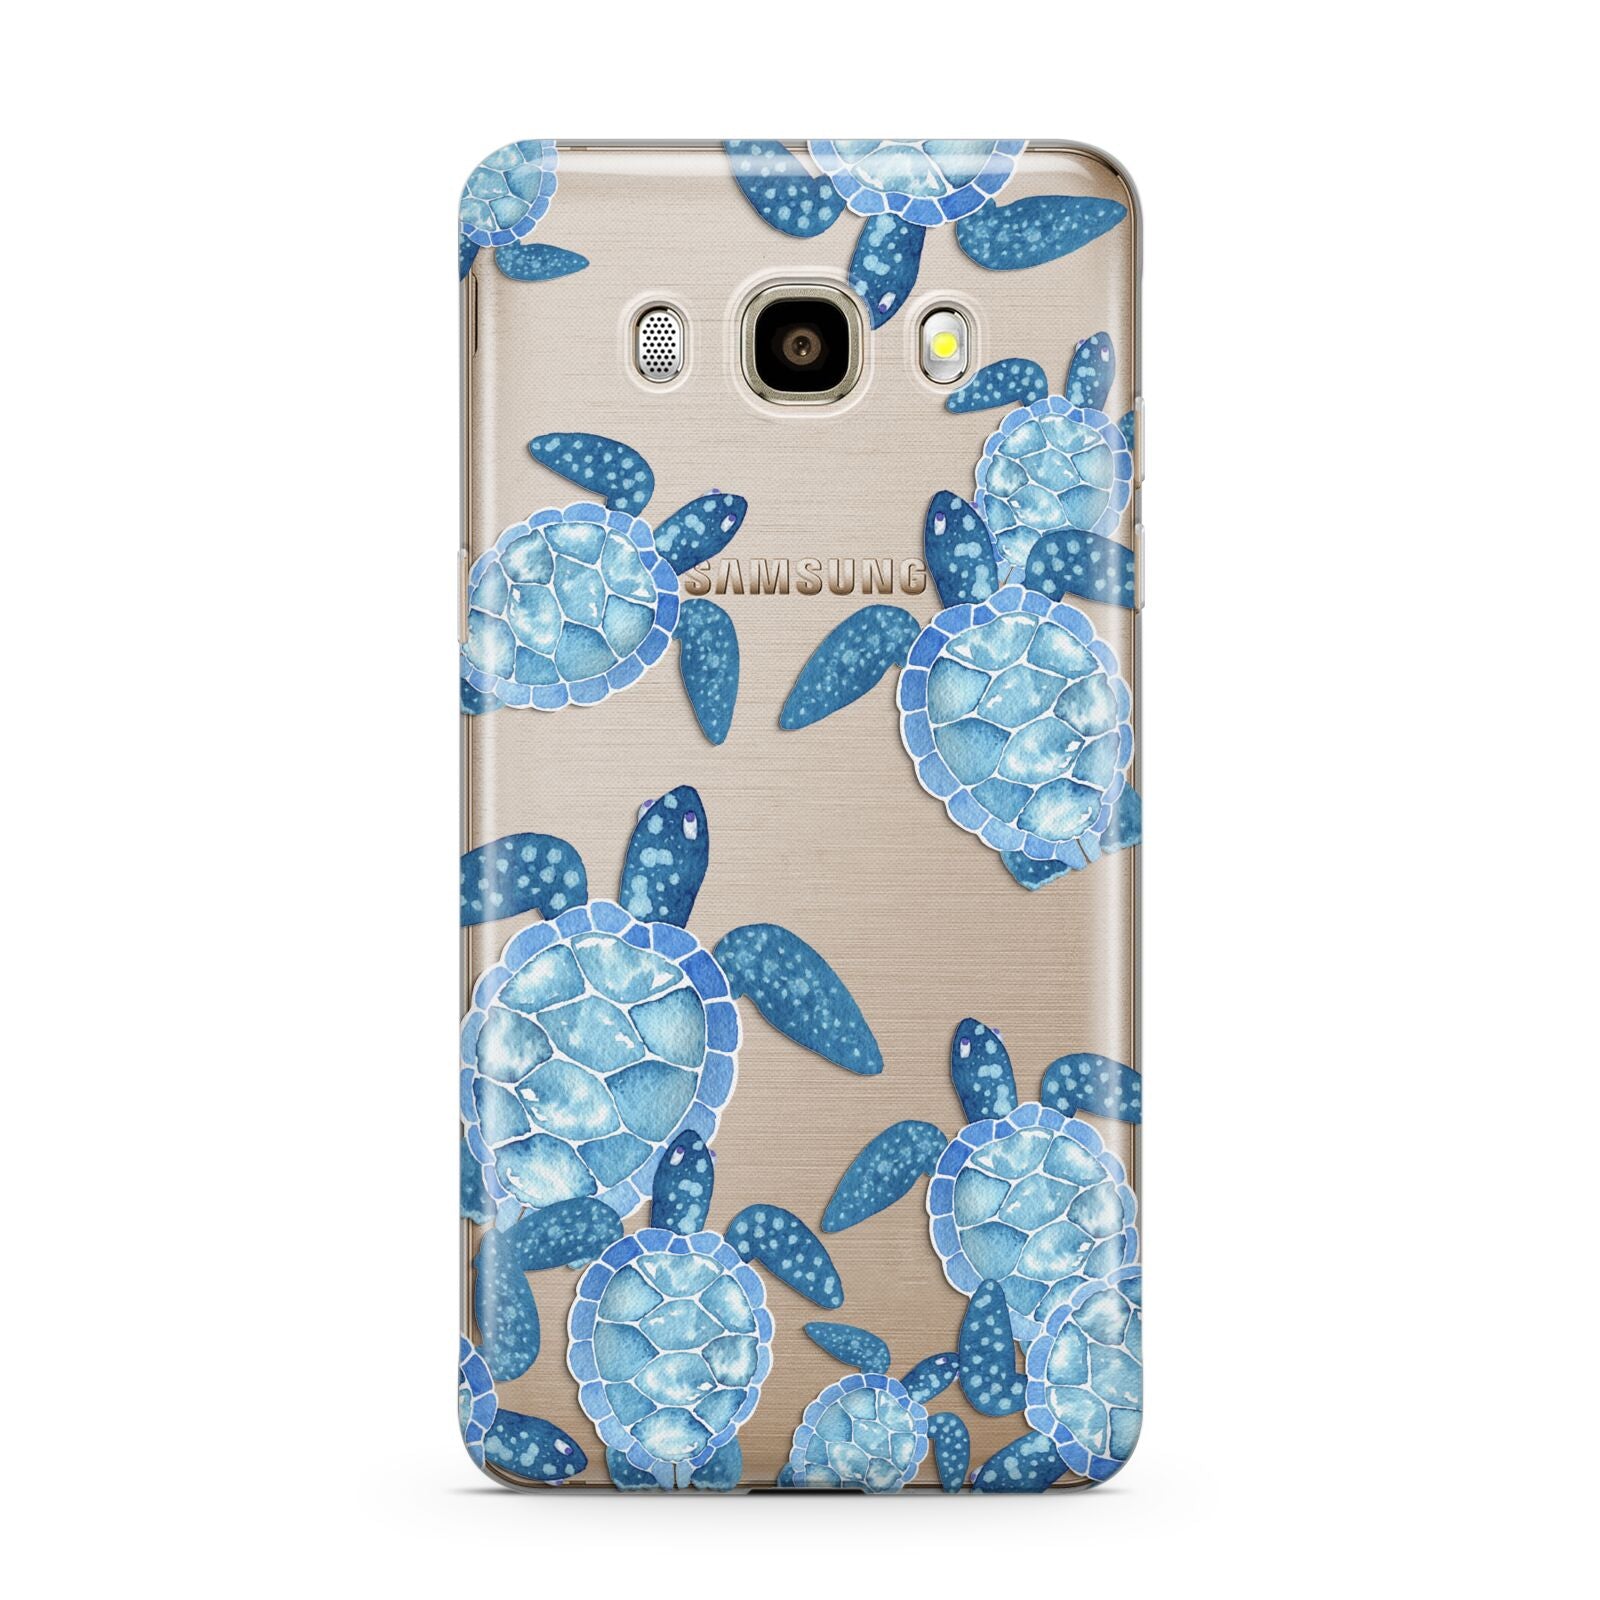 Turtle Samsung Galaxy J7 2016 Case on gold phone